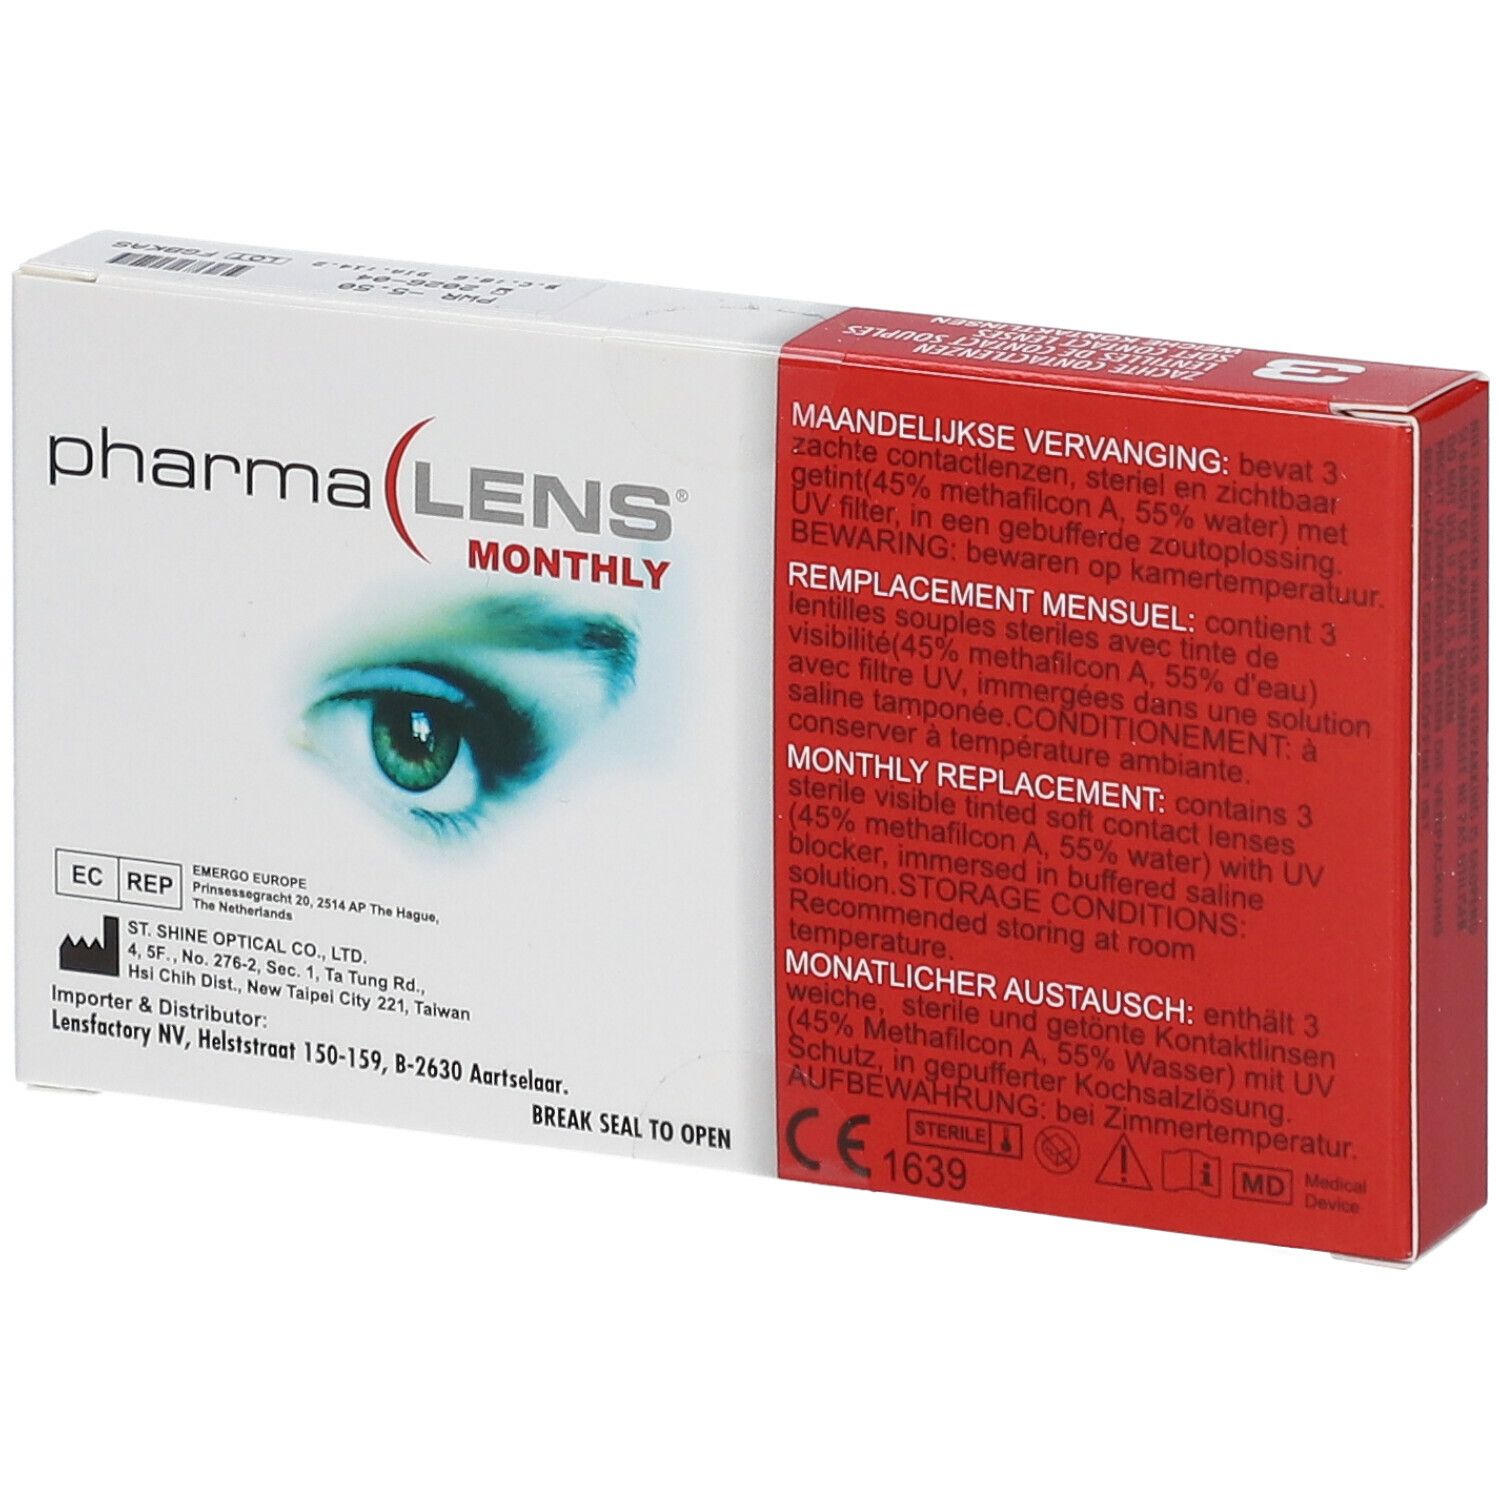 PharmaLens Lentilles (mois) (Dioptrie -5.50)